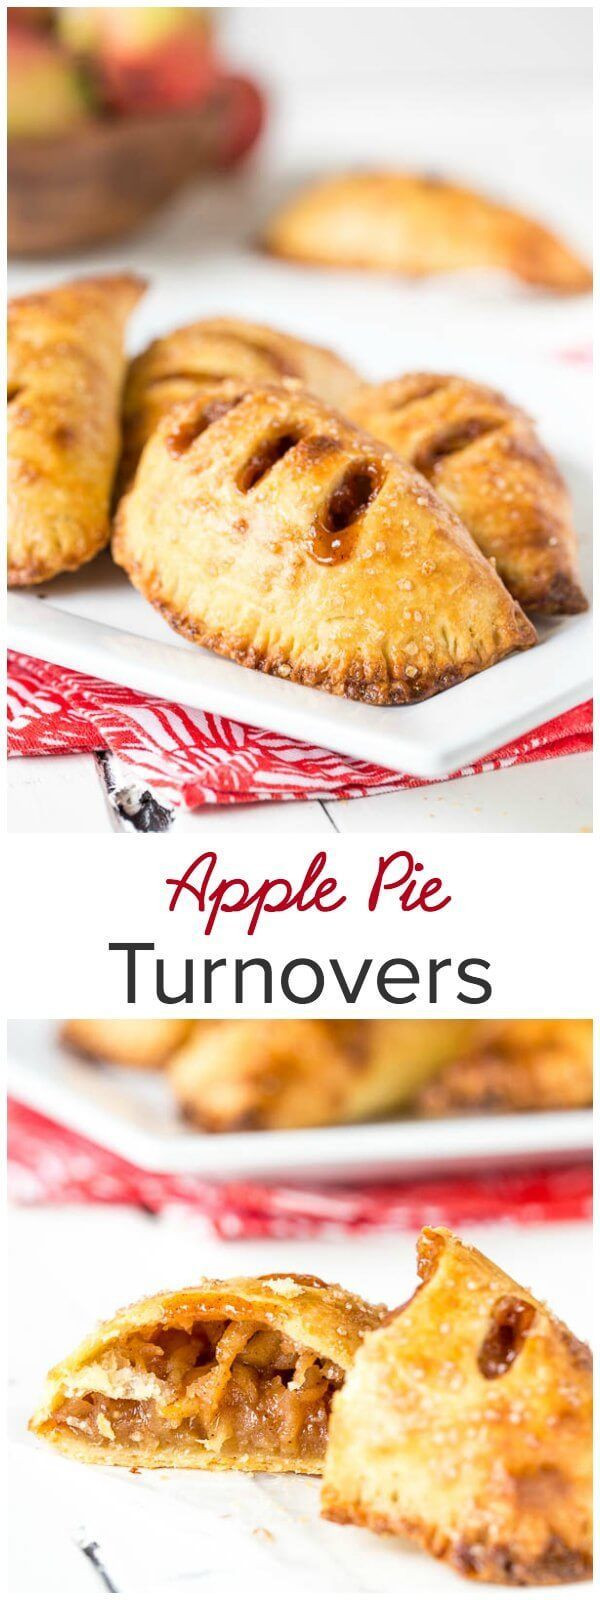 Make Ahead Apple Pie
 Make Ahead Apple Pie Turnovers Recipe